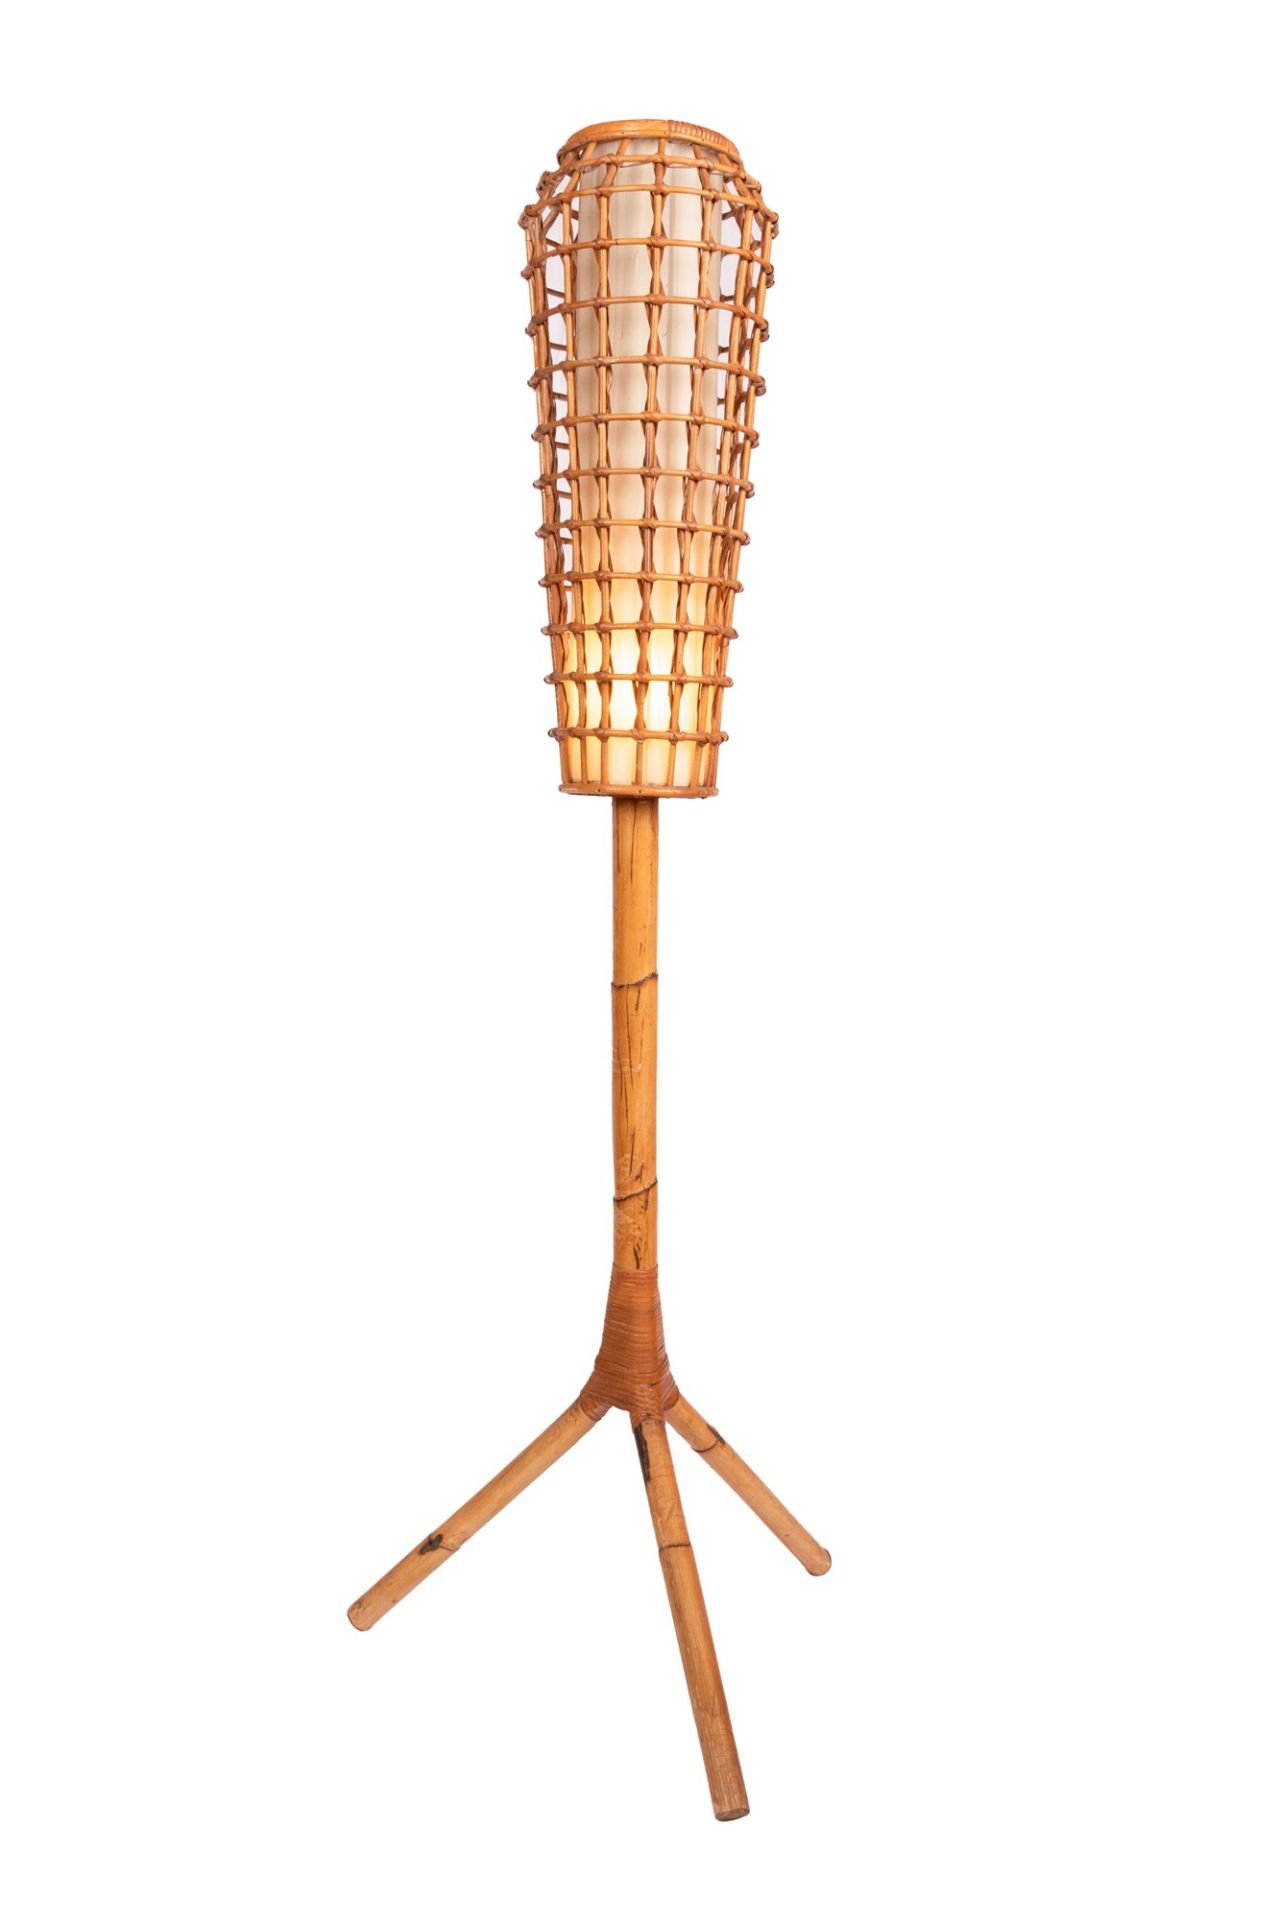 Franco Albini Robbiate 1905-Milano 1977 Mid-Century Italian Rattan and Bamboo Floor Lamp in the styl - Image 8 of 8